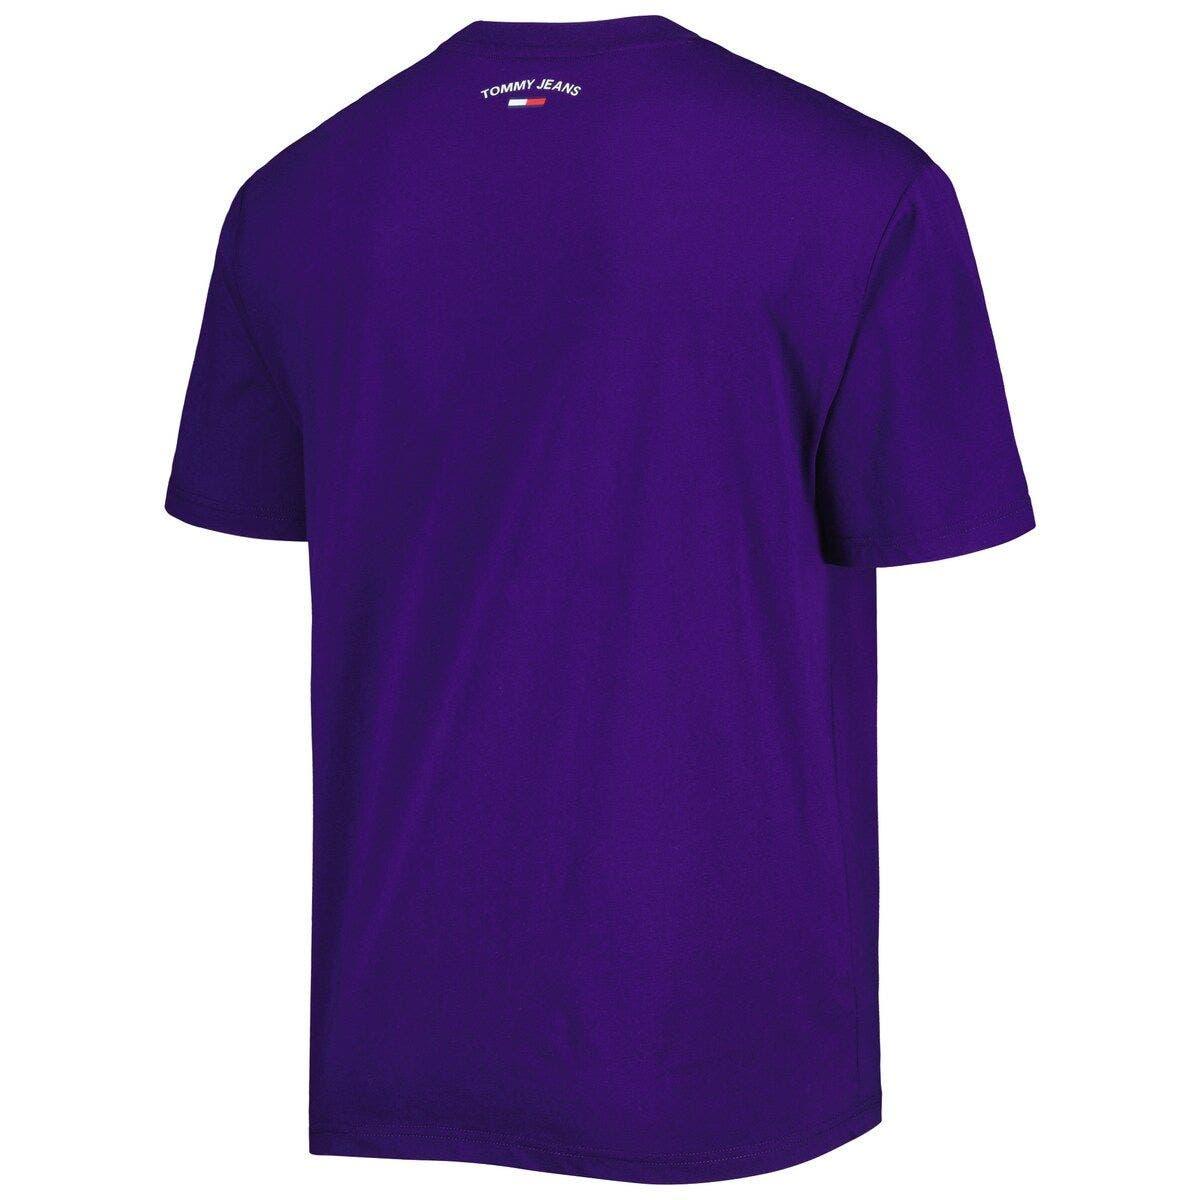 Men's Tommy Jeans Navy Memphis Grizzlies Tim Backboard T-Shirt Size: Medium